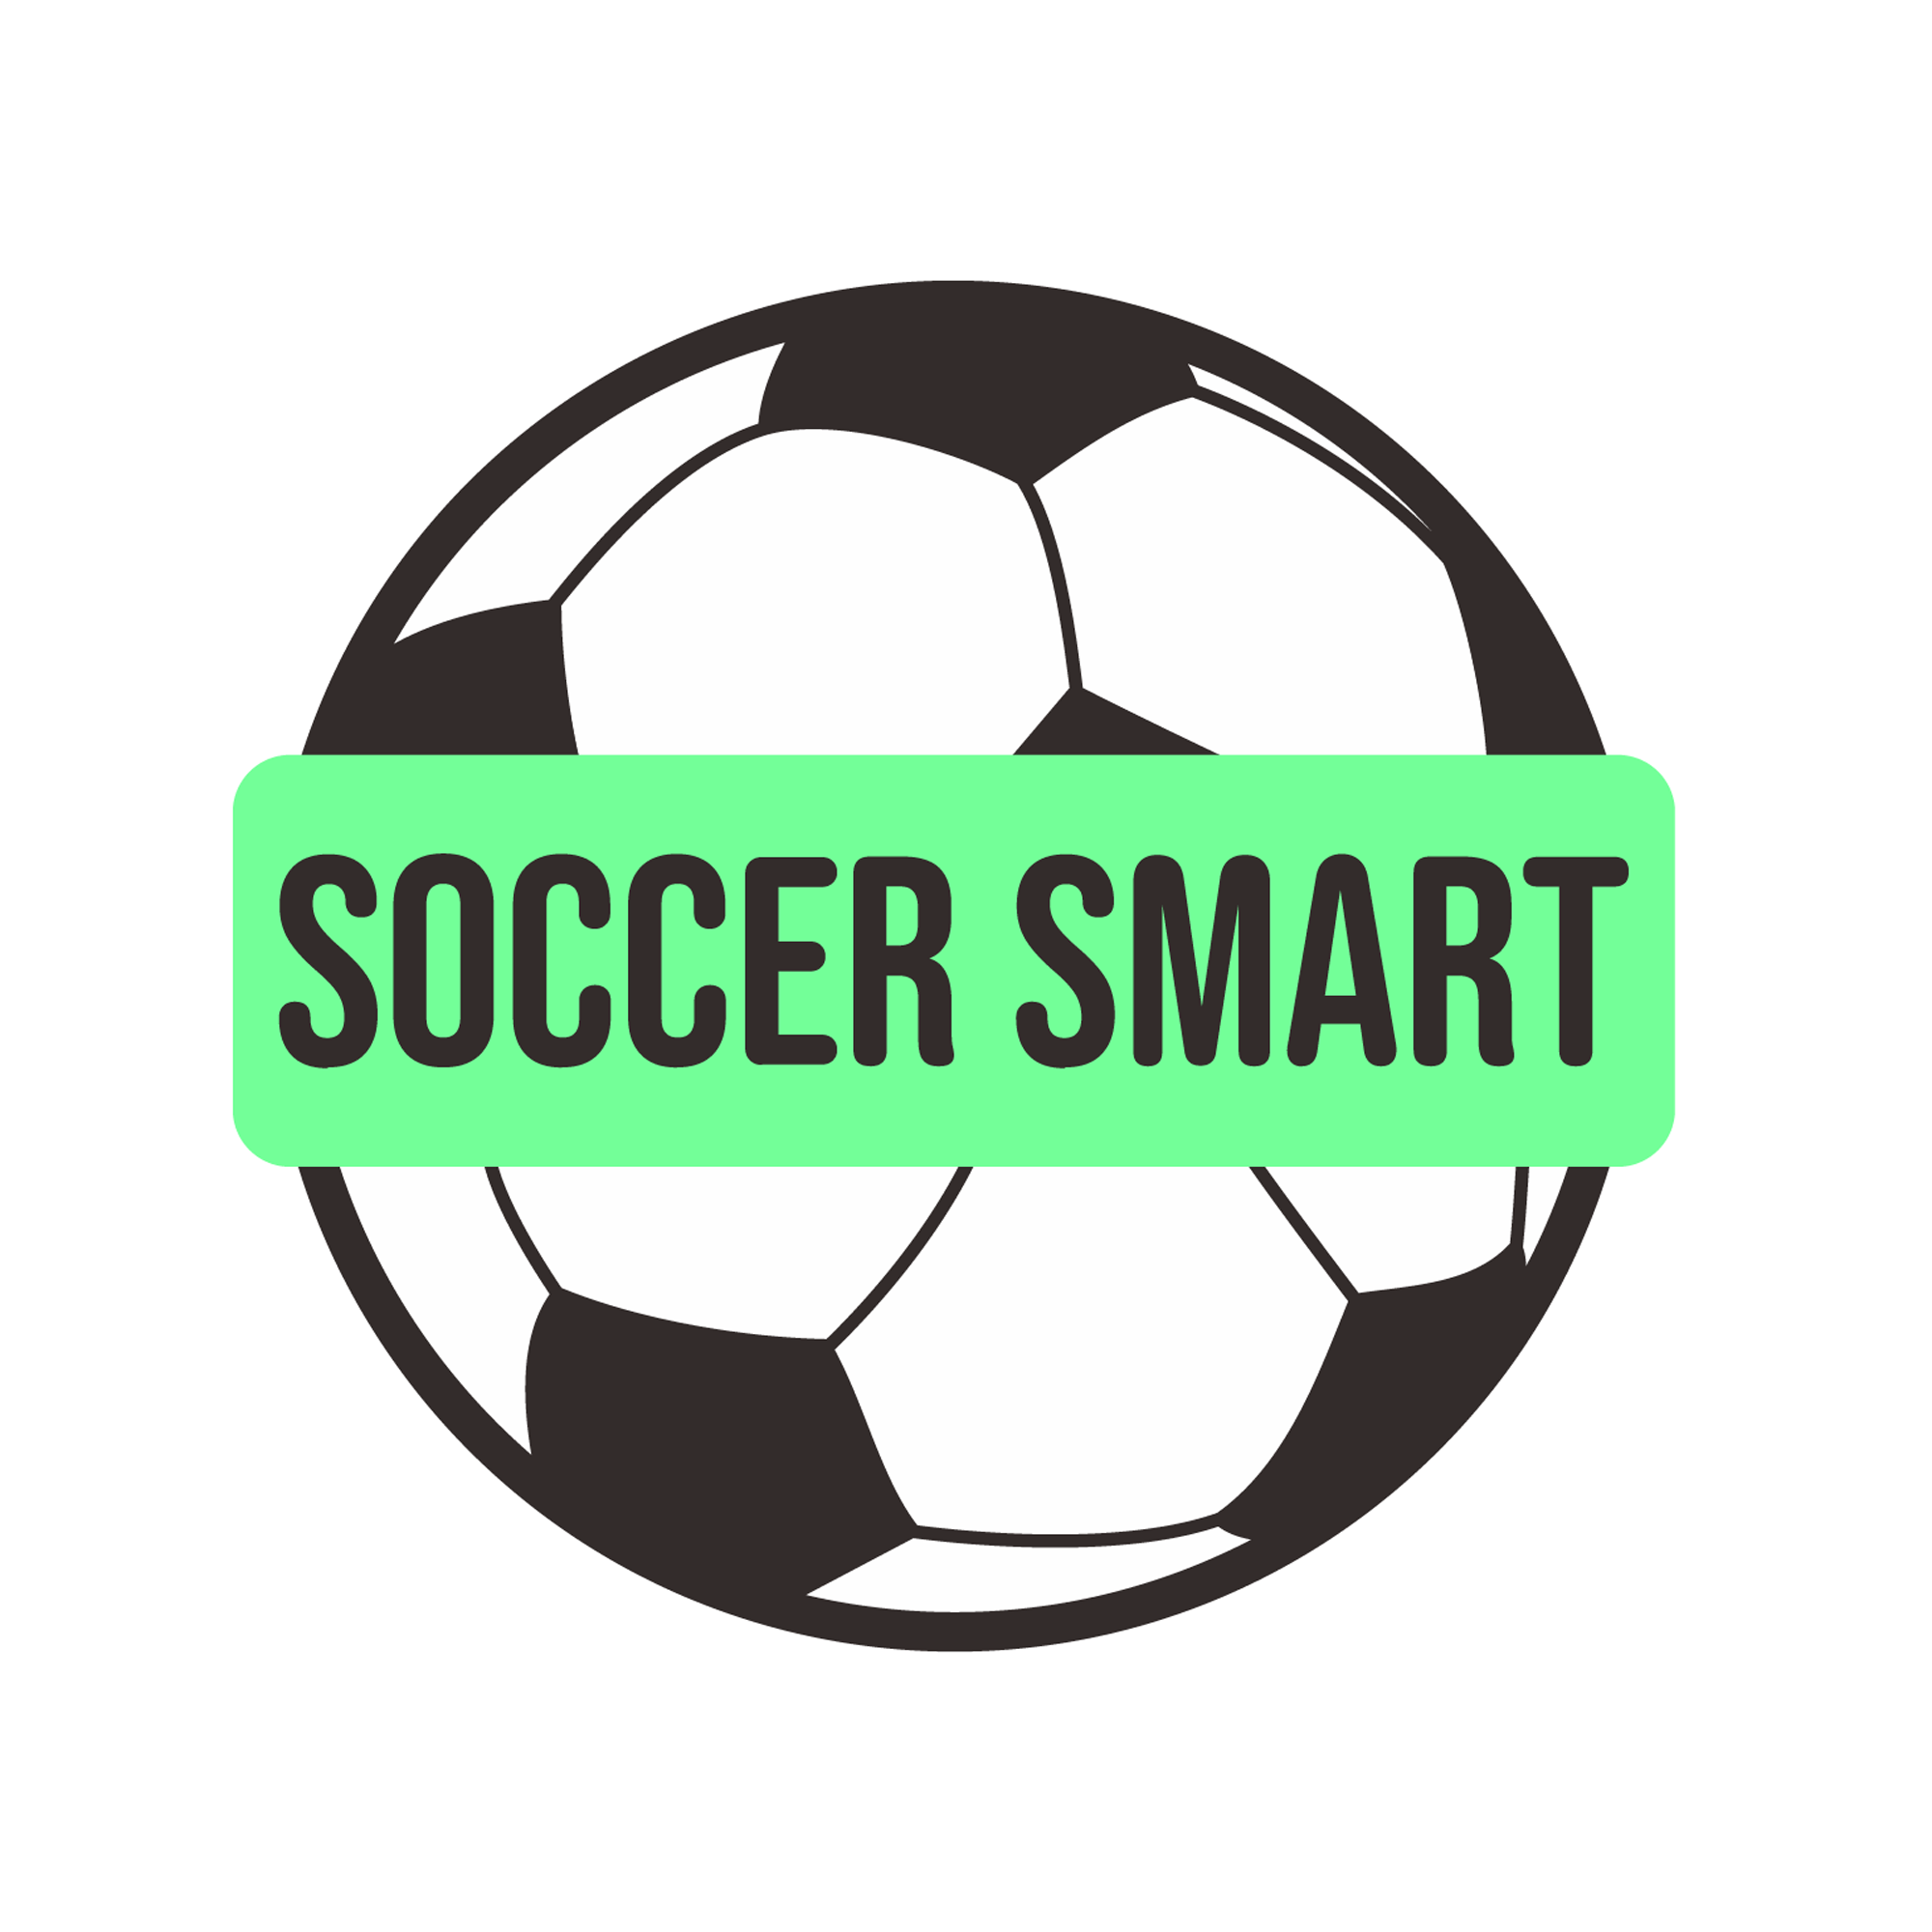 Soccer Smart Ltd - Football Trial in Spain - Play Soccer in Australia